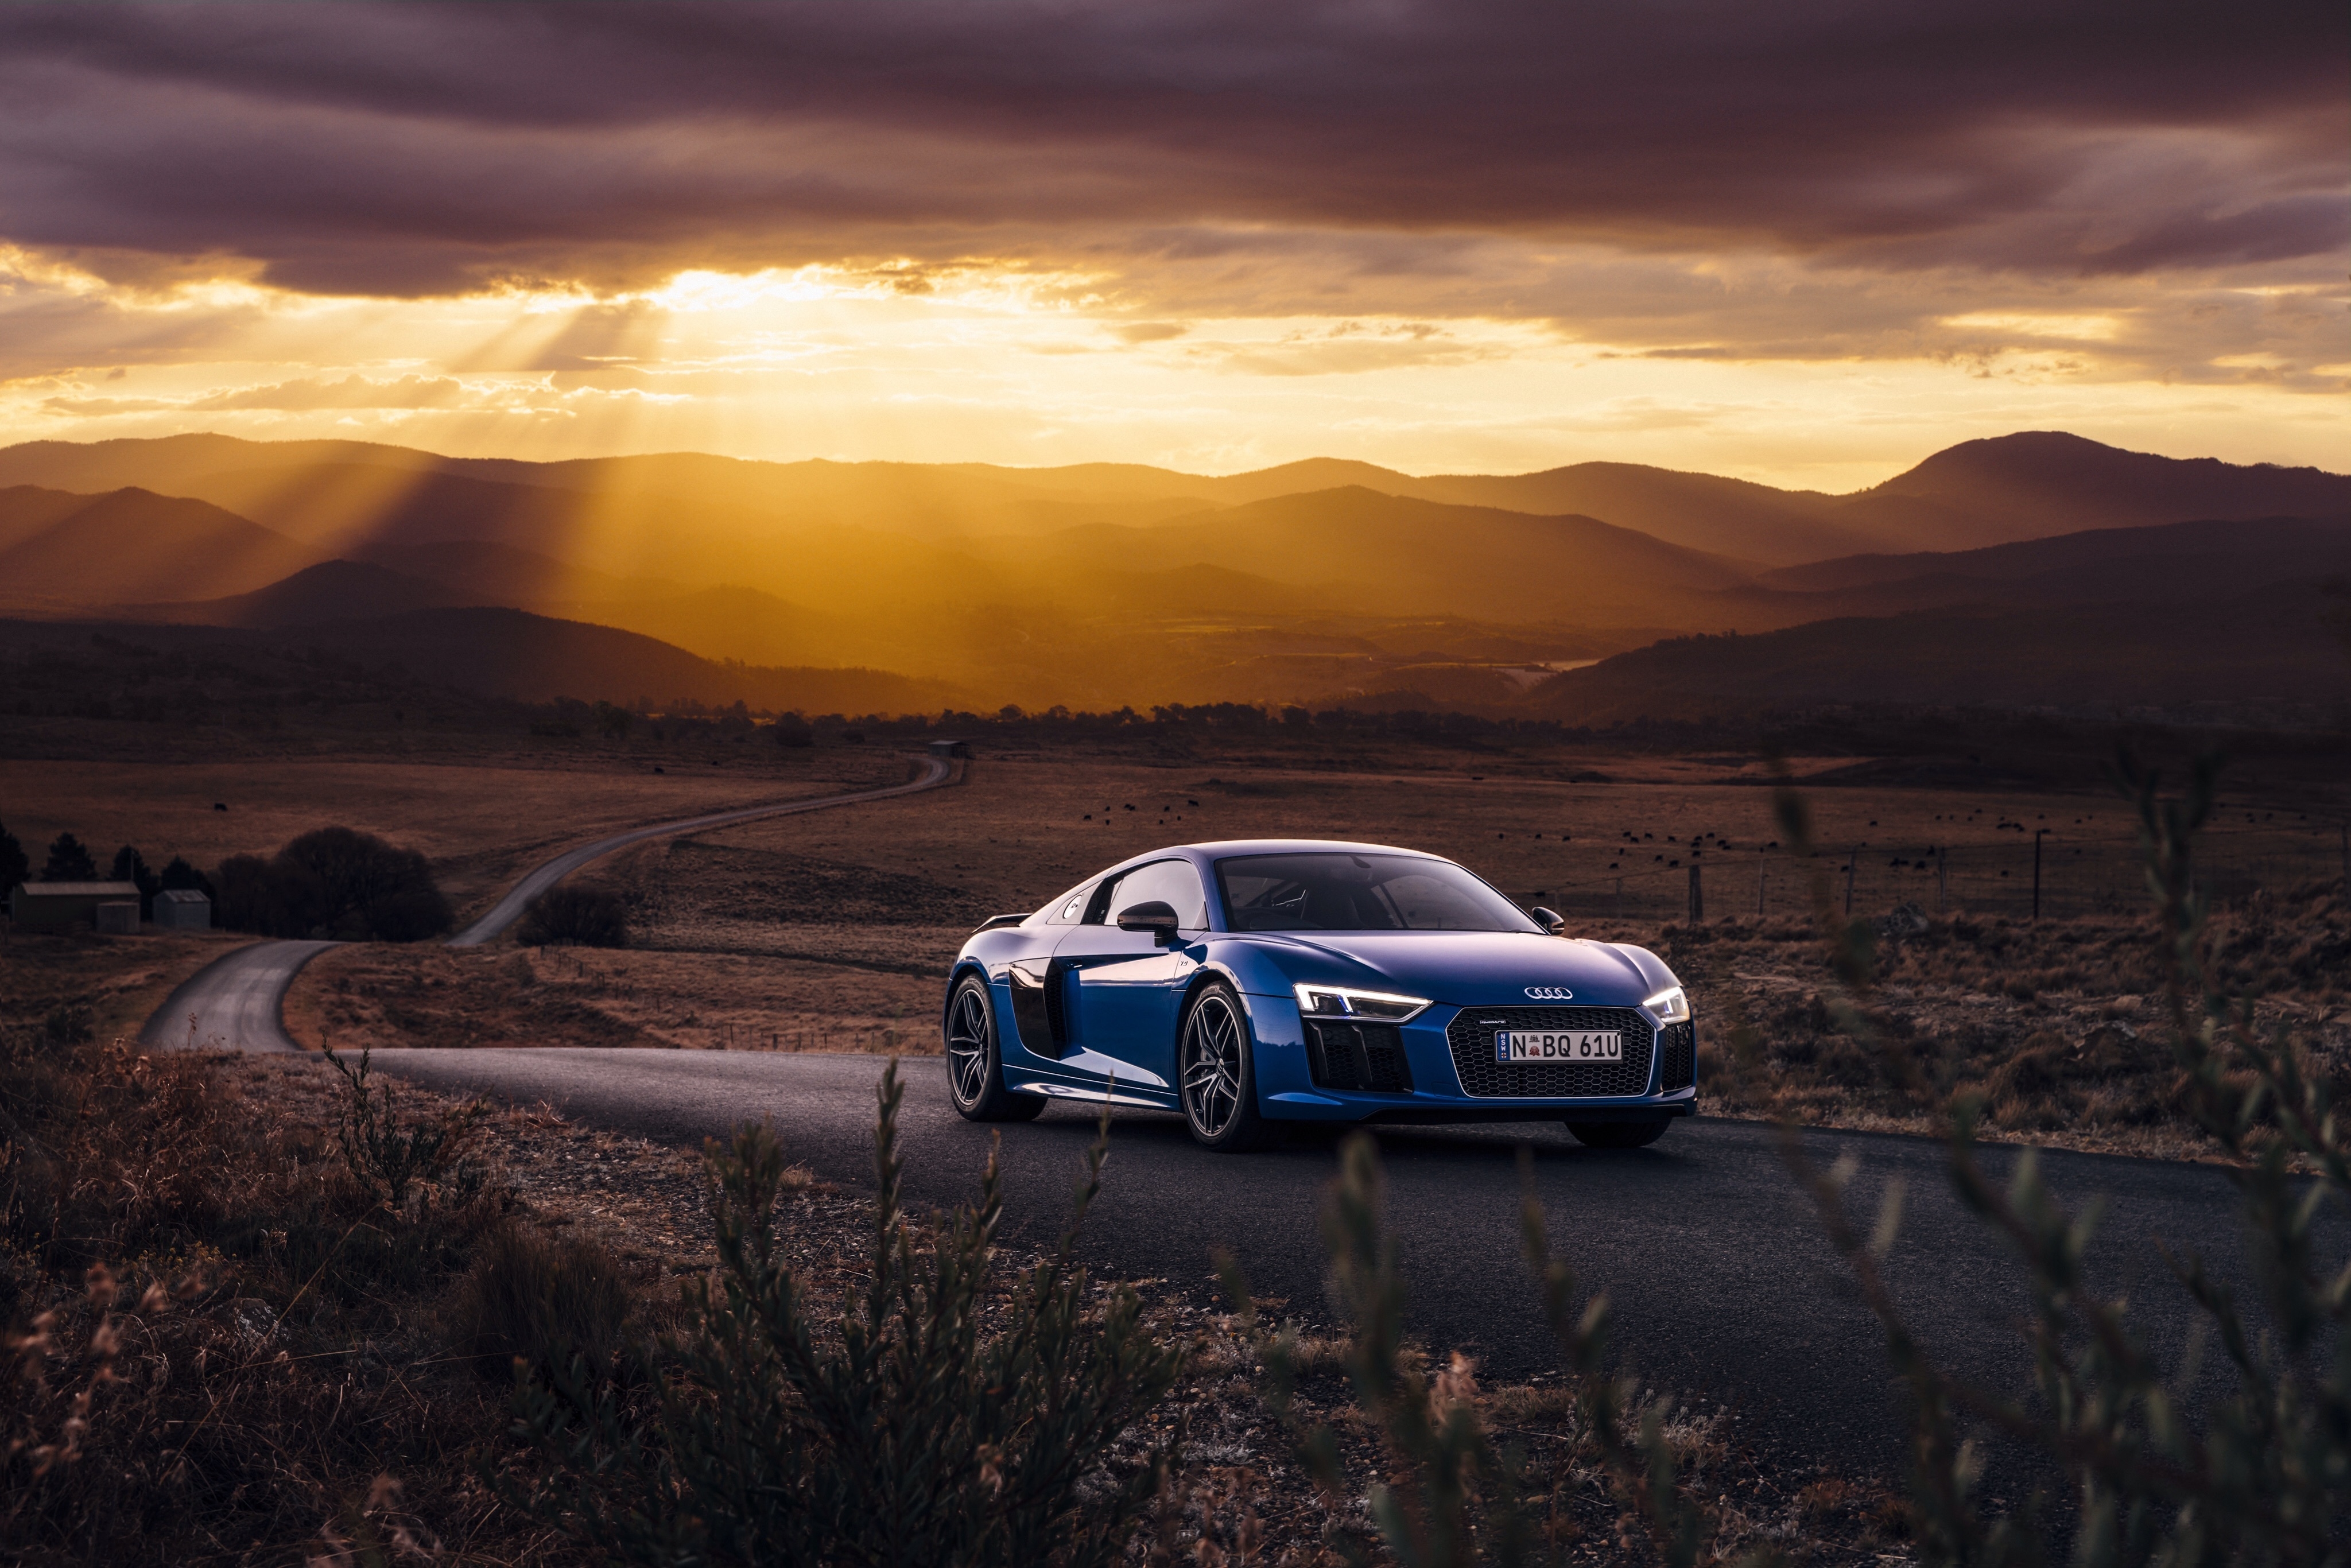 Blue Audi R8 Le Mans Concept at sunset on a desert road